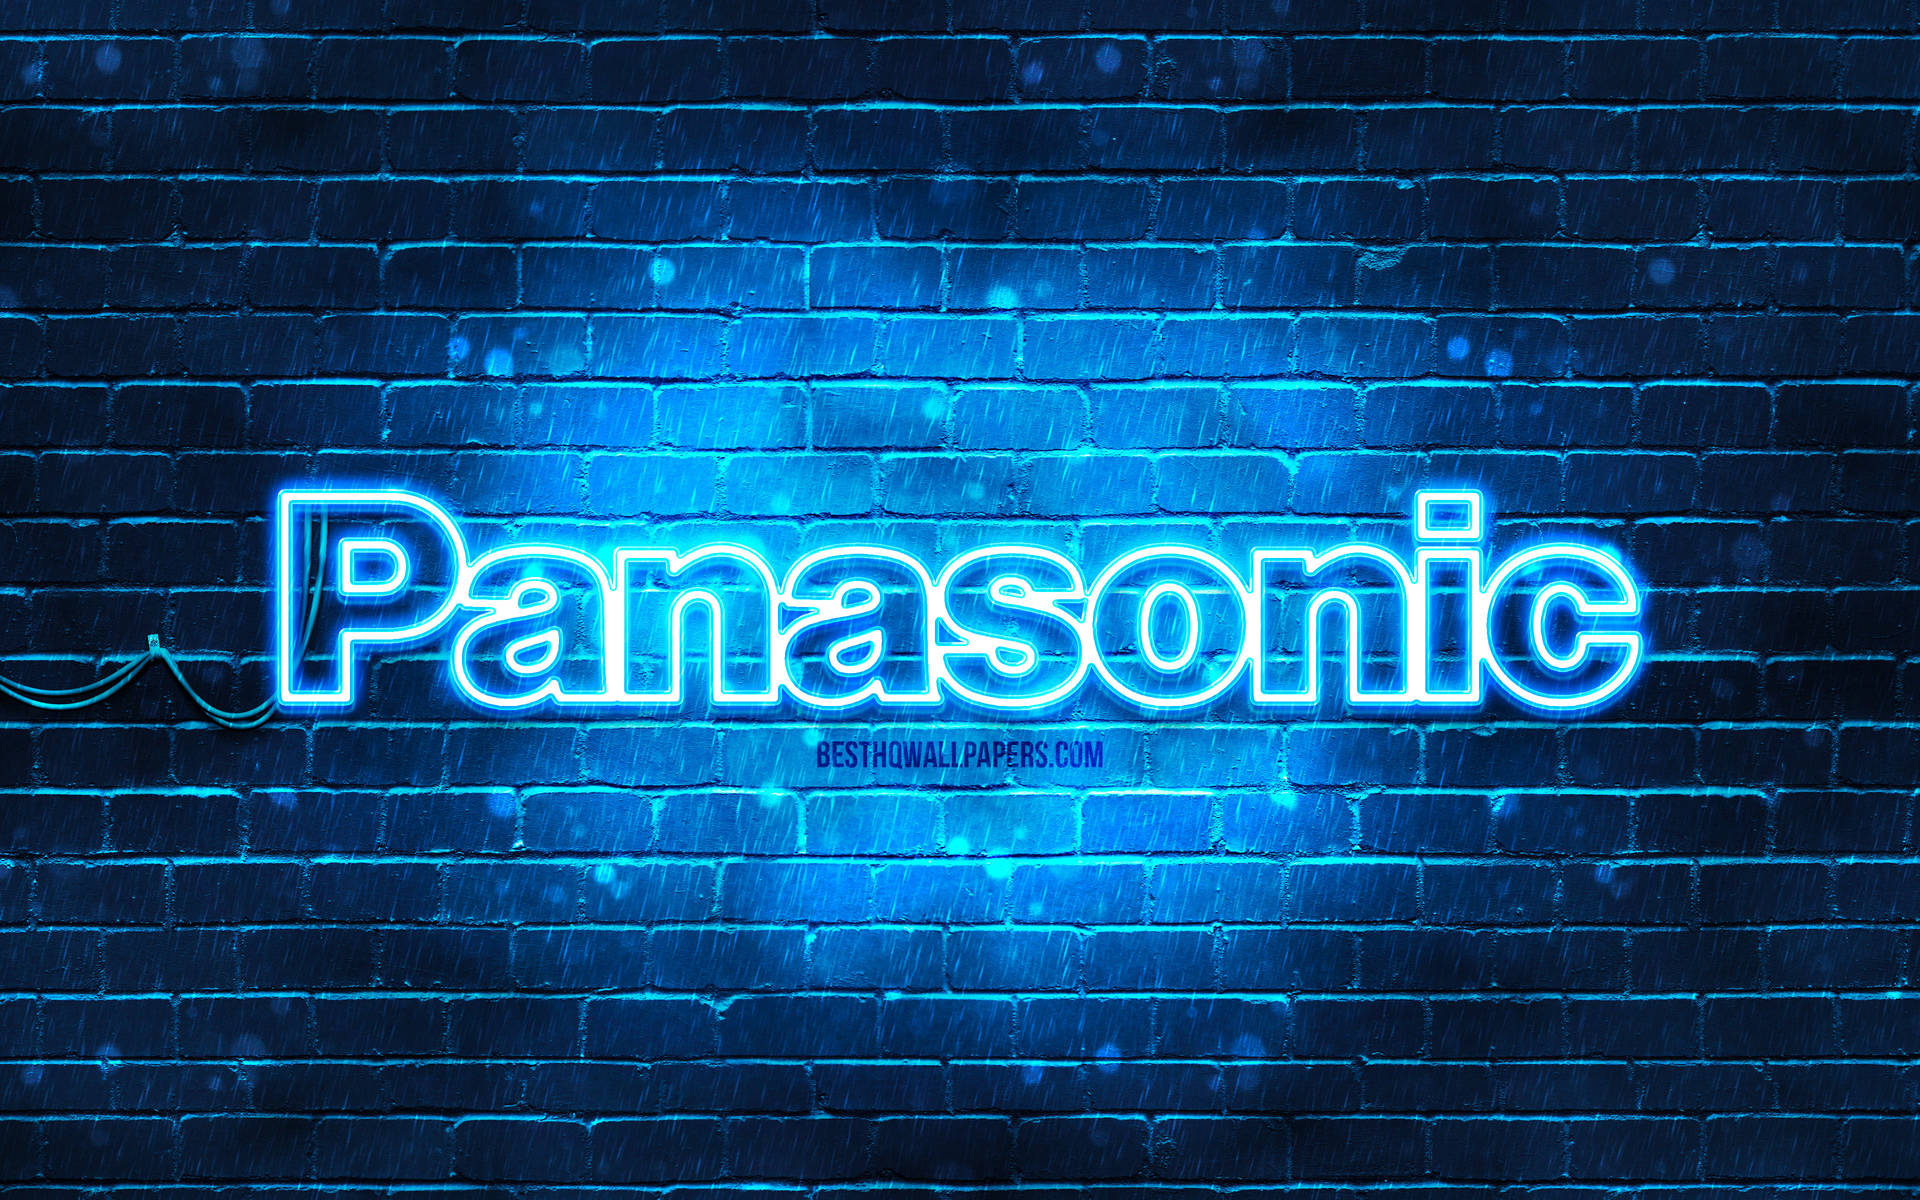 Panasonic Neon Blue Brick Wall